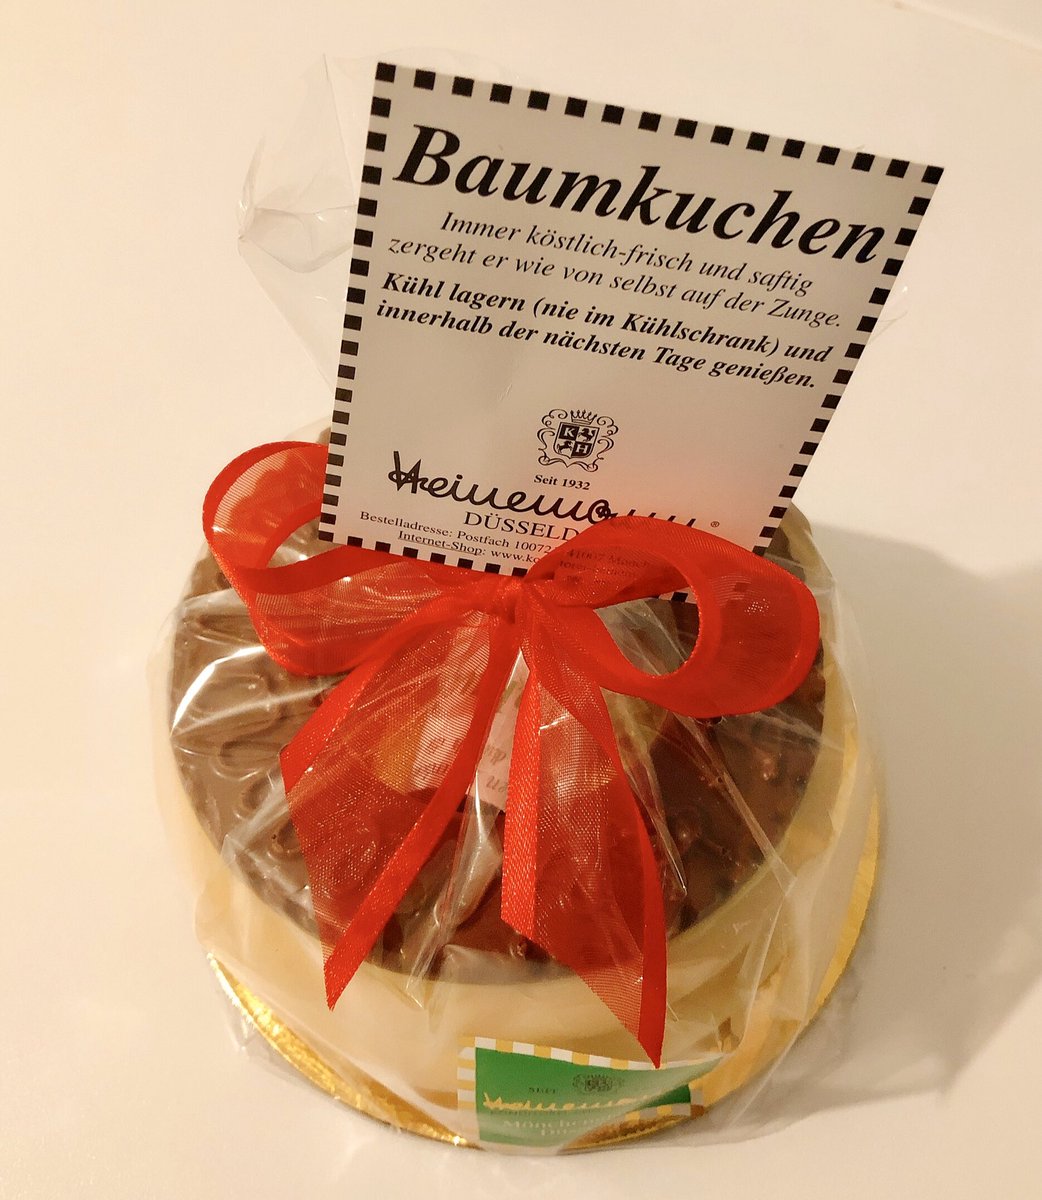 Ann ドイツ観光 タビシタ バウムクーヘンの日 ケーキの王様と称されドイツ菓子協会のエンブレムにも使用されているバウムクーヘン ドイツの有名4店舗のバウムクーヘンを食べ比べしてみましたが 個人的美味しかった順はハイネマン ザルツヴェーデラー